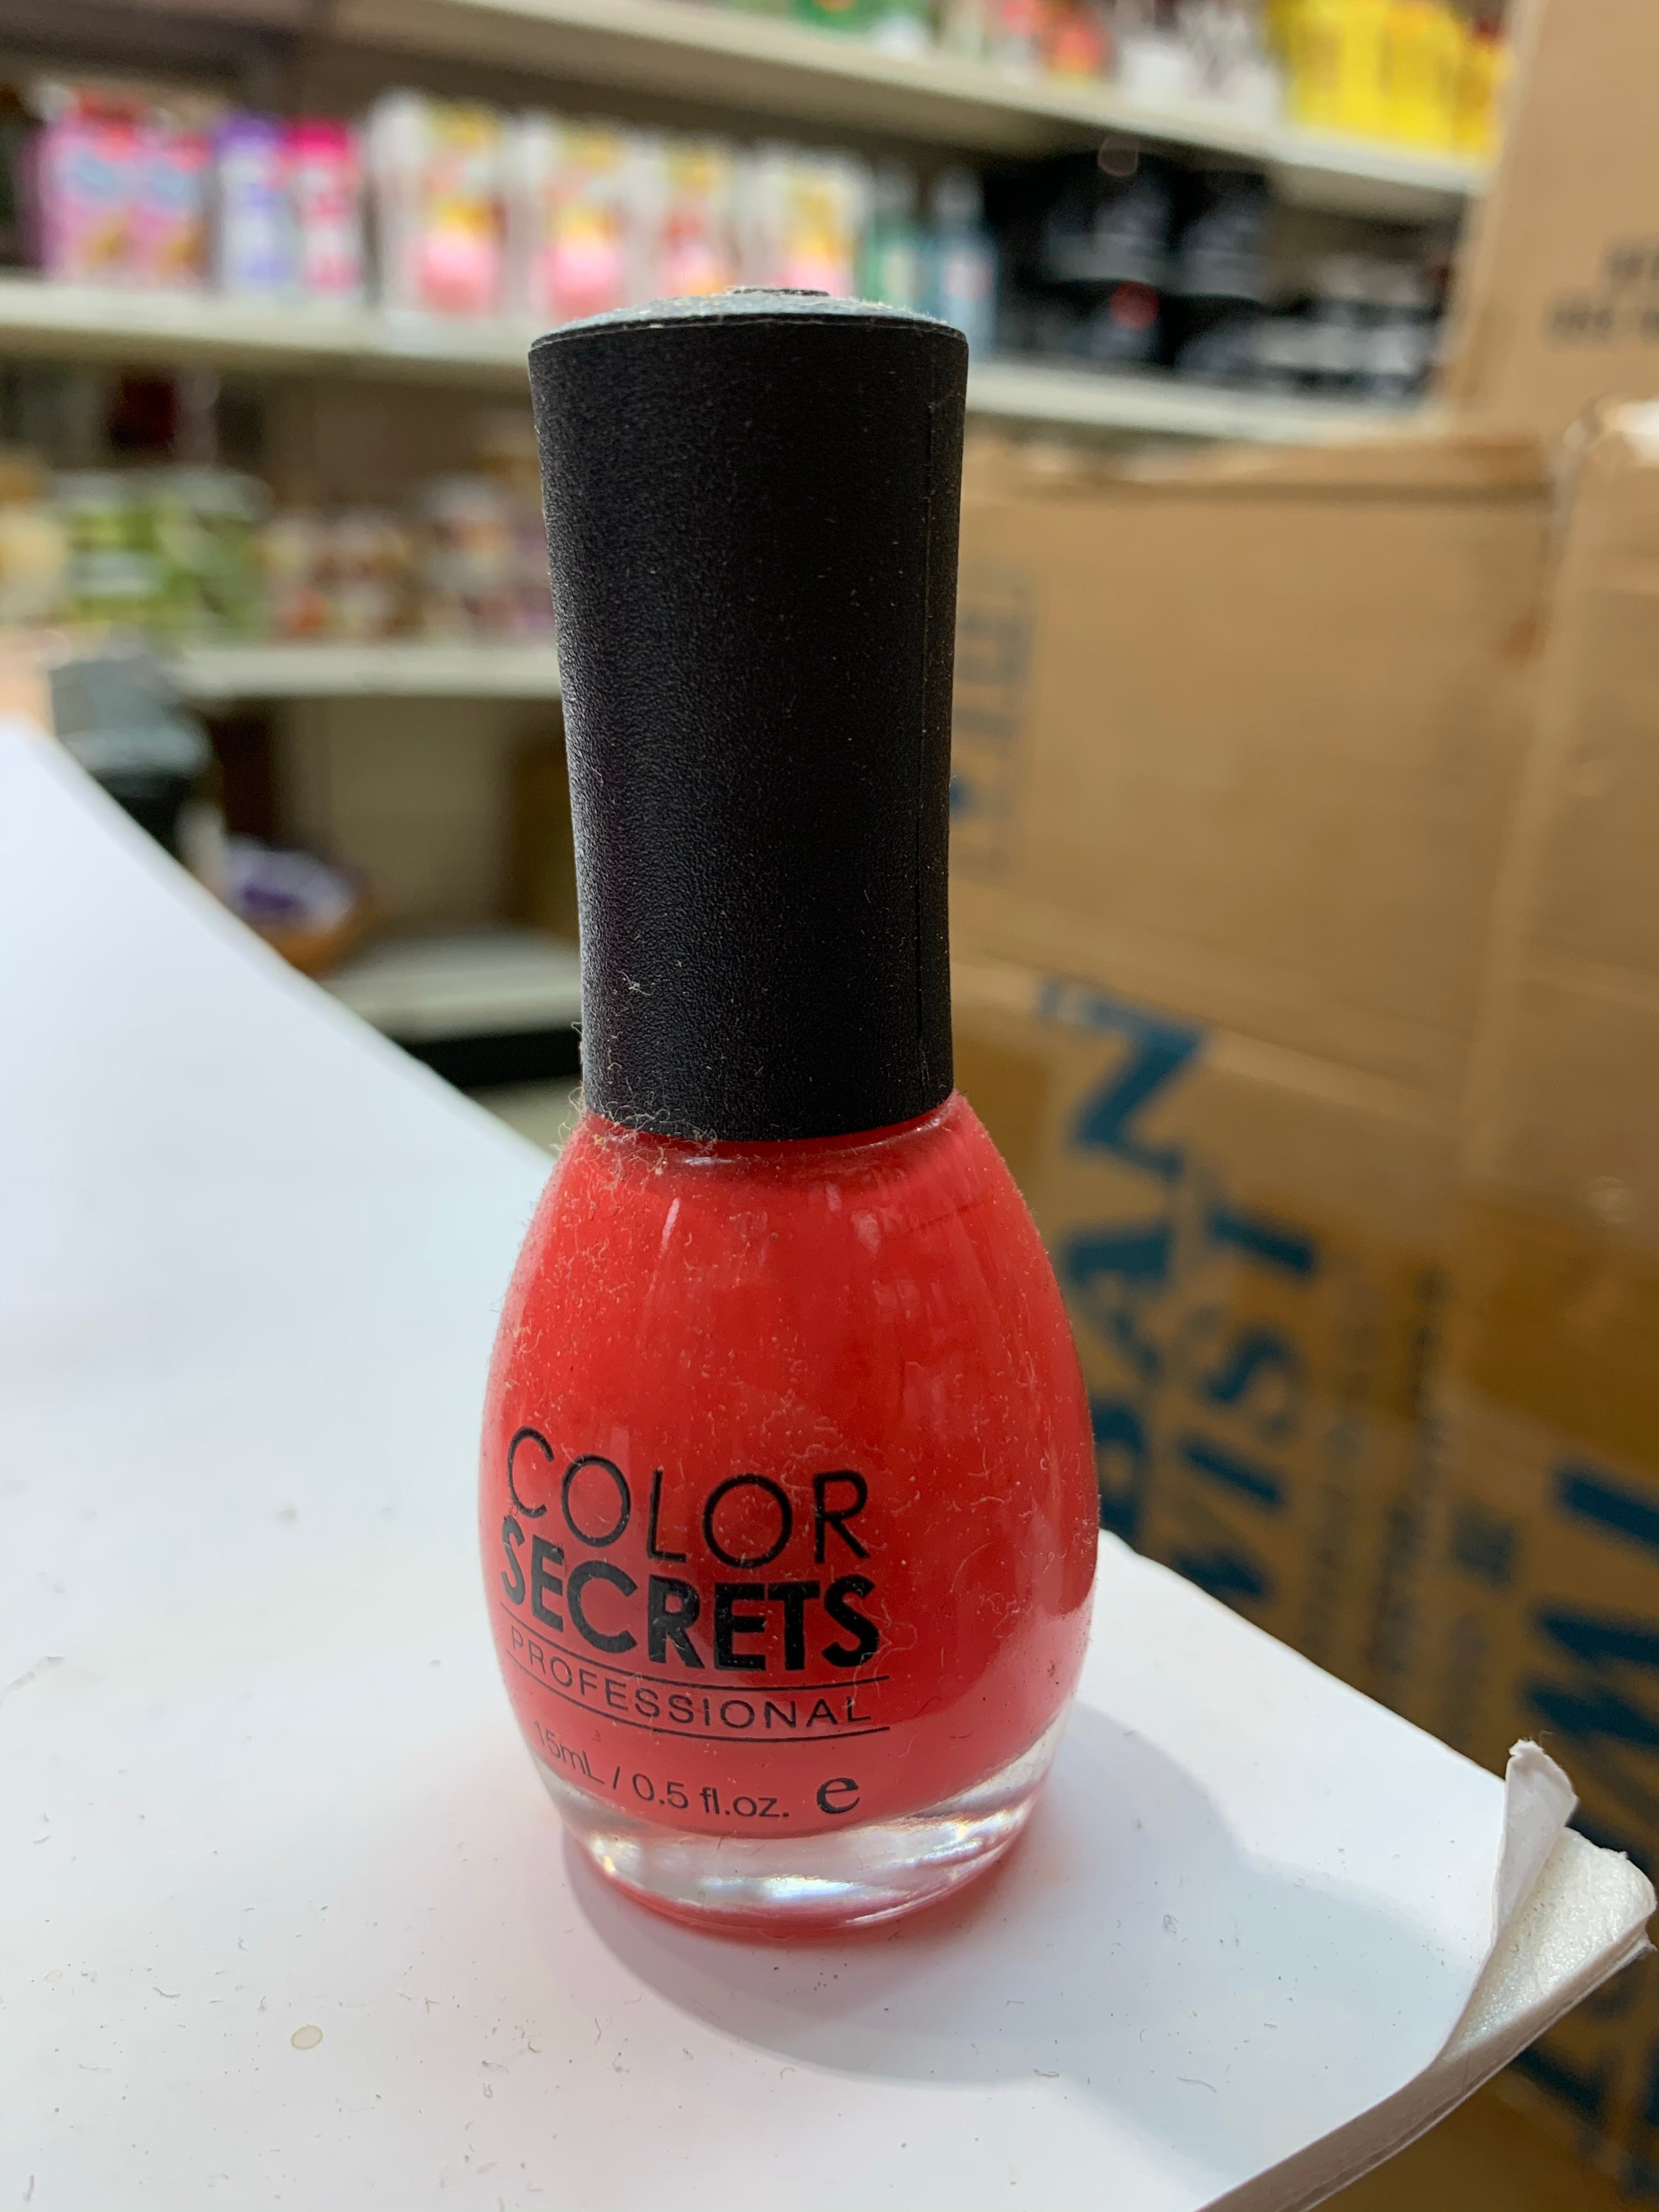 Color secrets nail polish